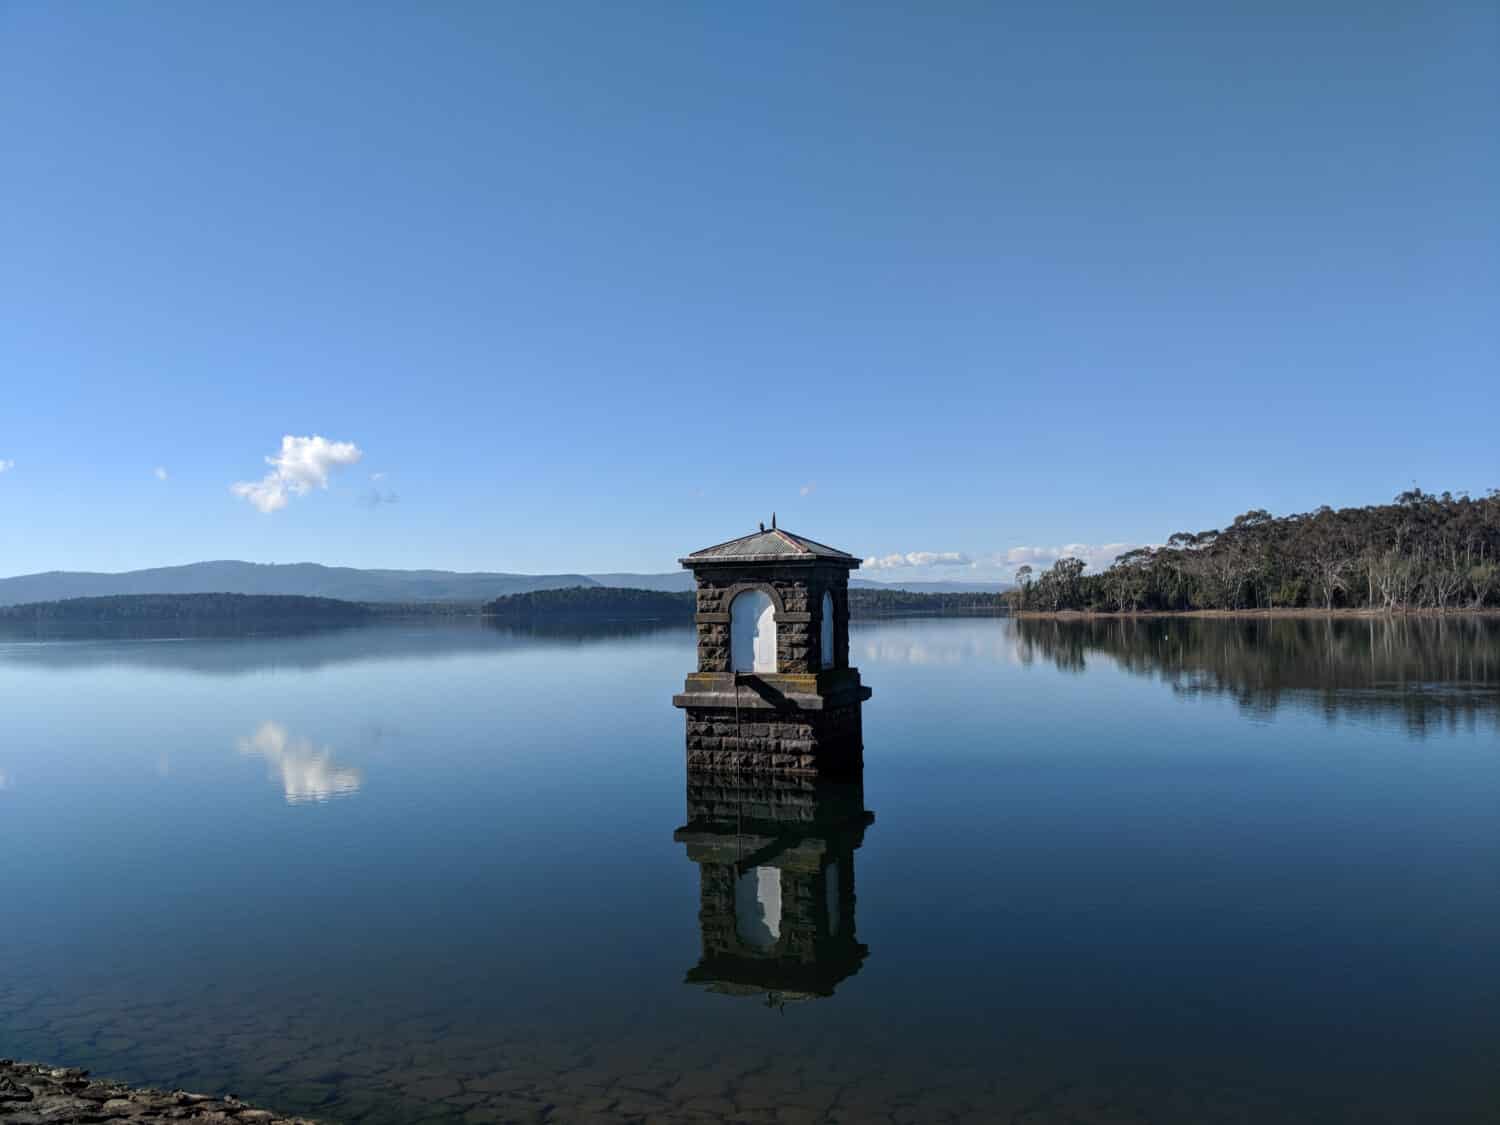 Yan Yean water reservoir in Melbourne.